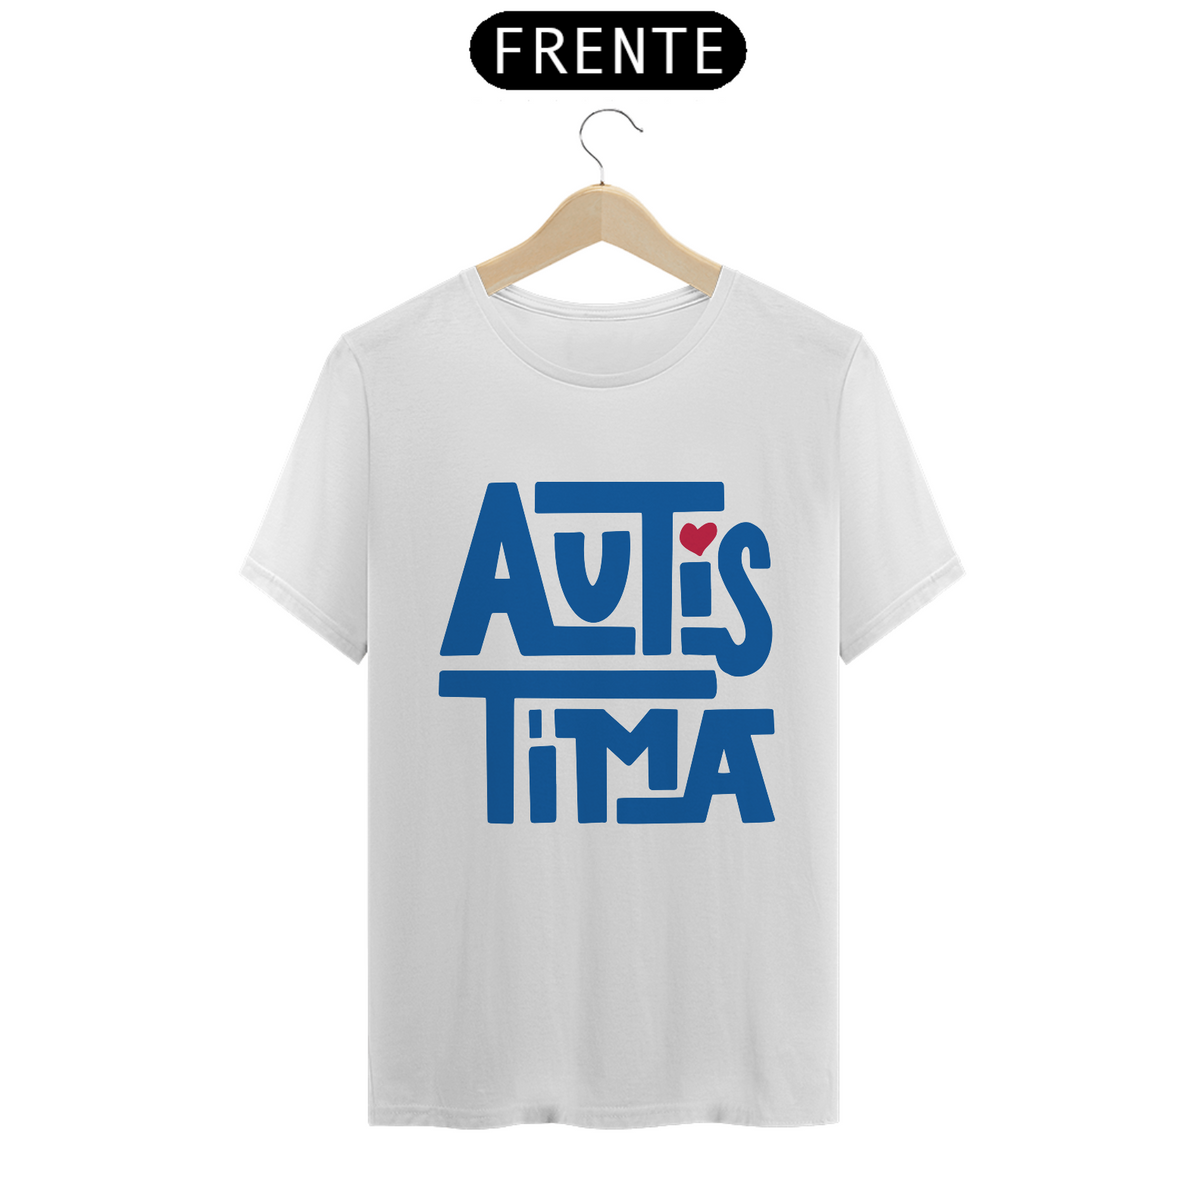 Nome do produto: Camiseta Quality - Autistima 1